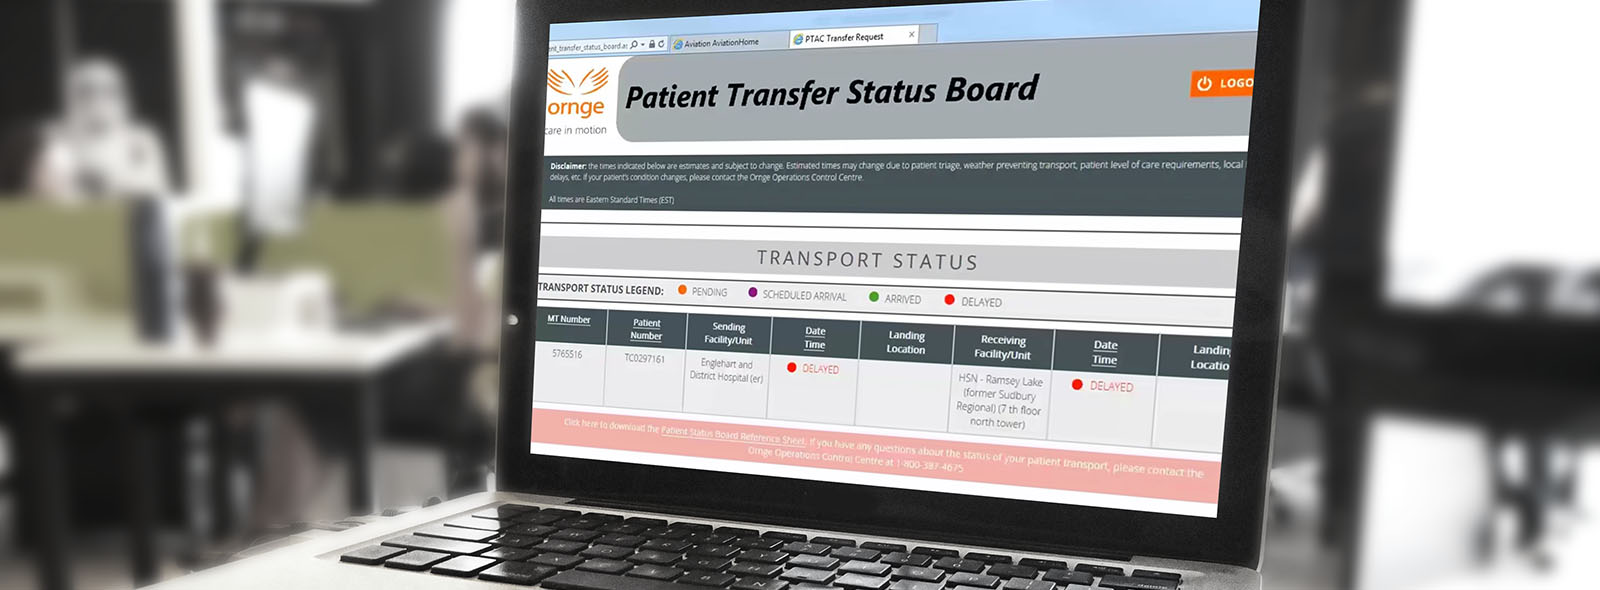 Sample Patient Transfer Status Board